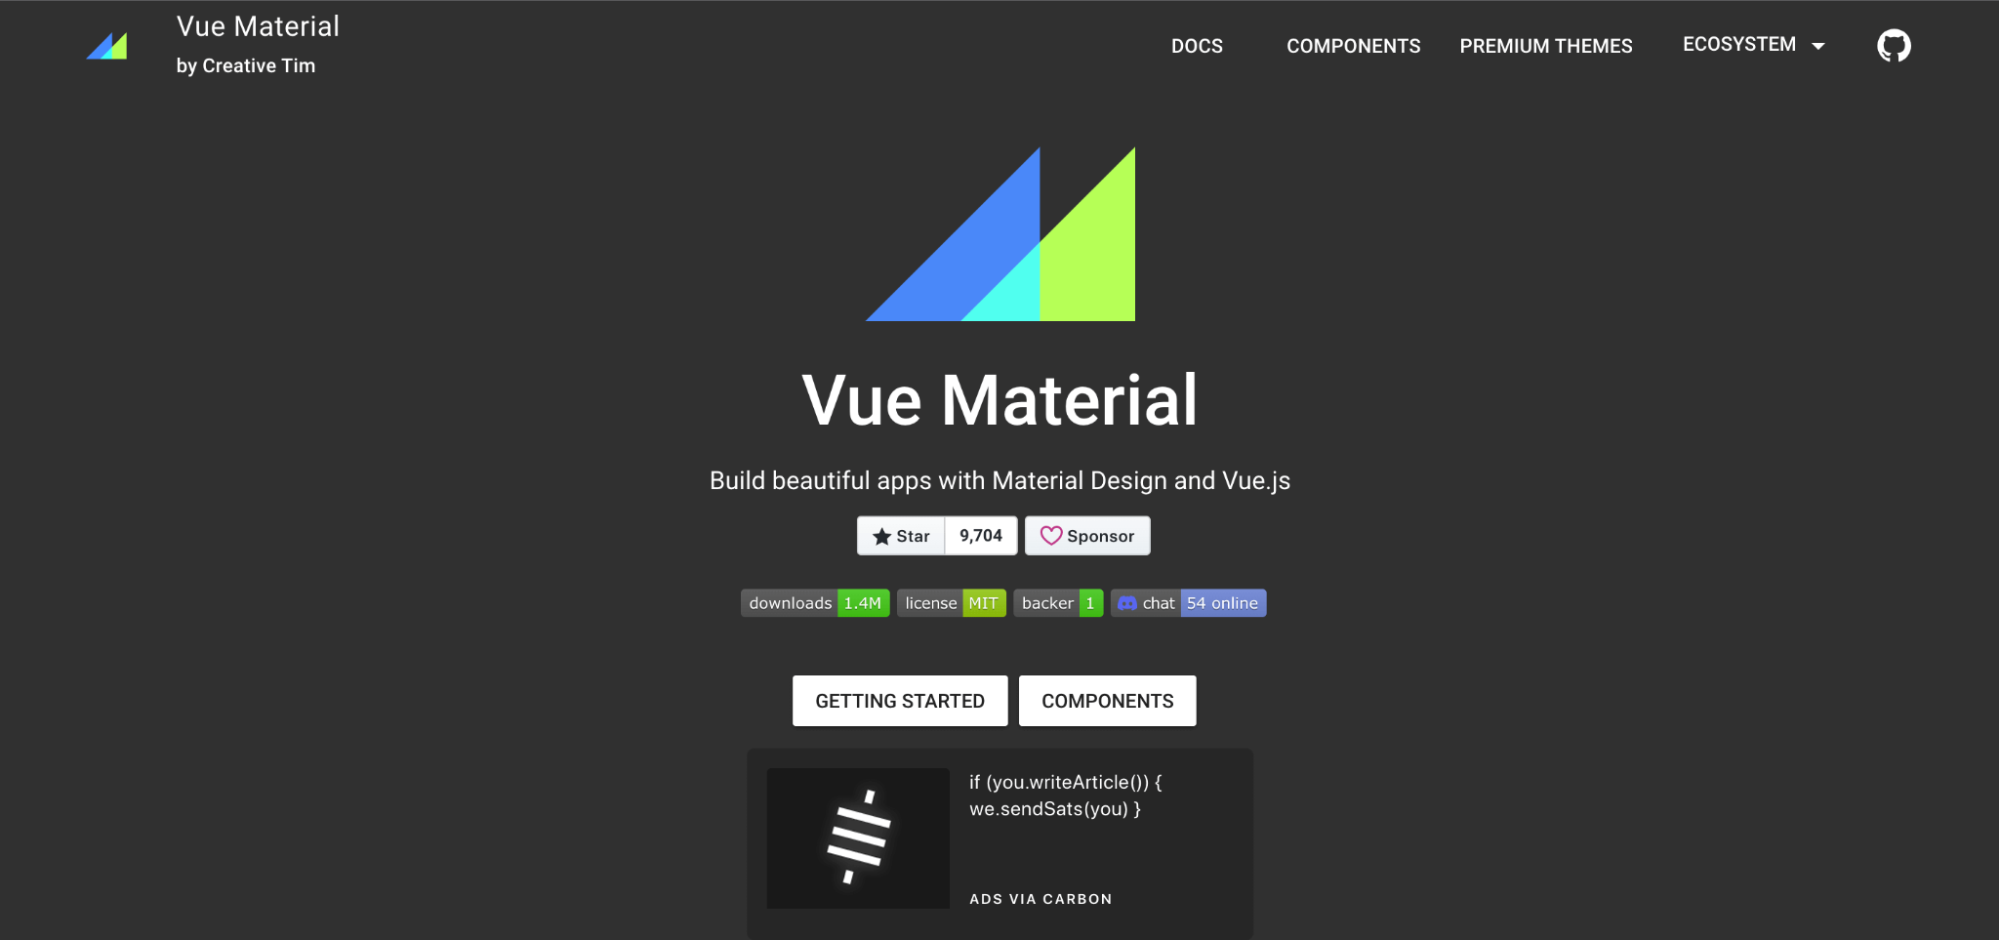 Screenshot: The Vue Material homepage.